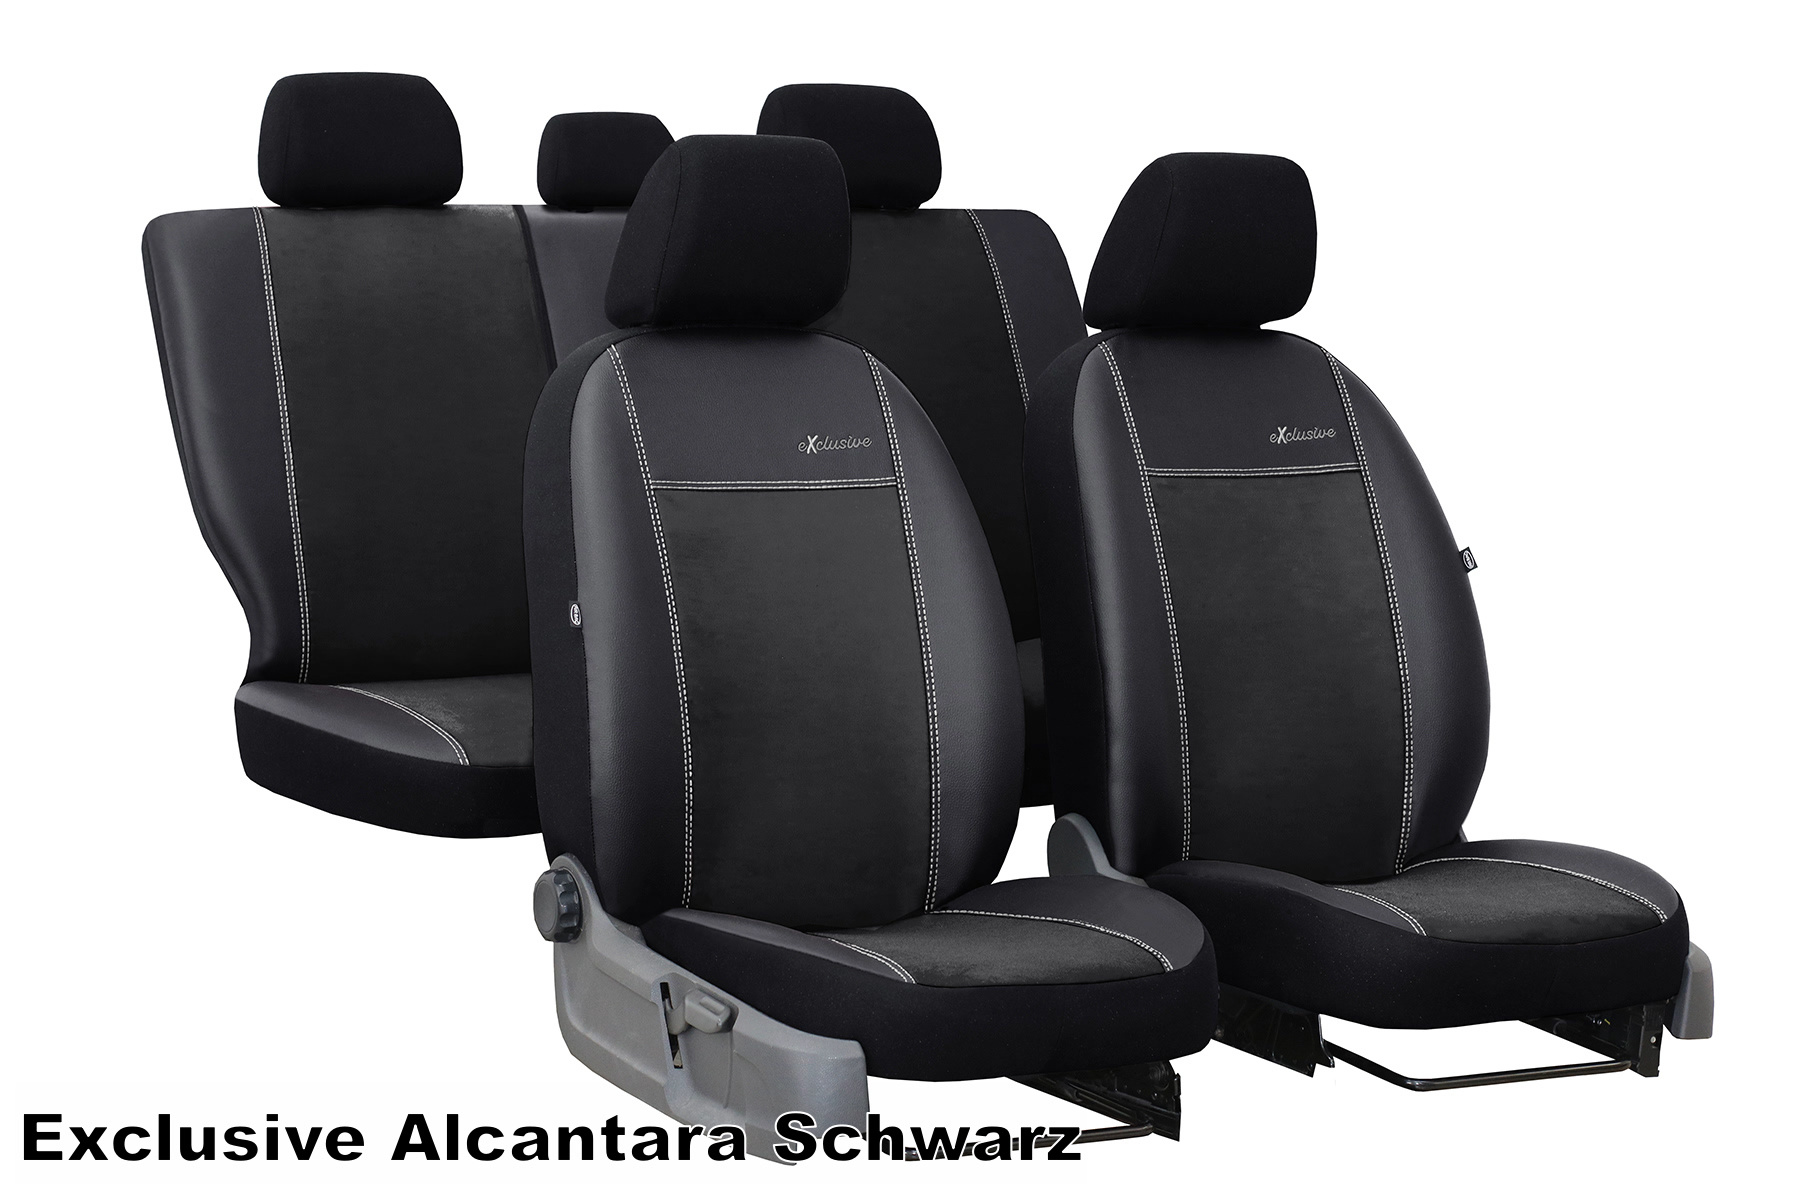 Sitzbezüge für Citroen C4 Aircross günstig bestellen